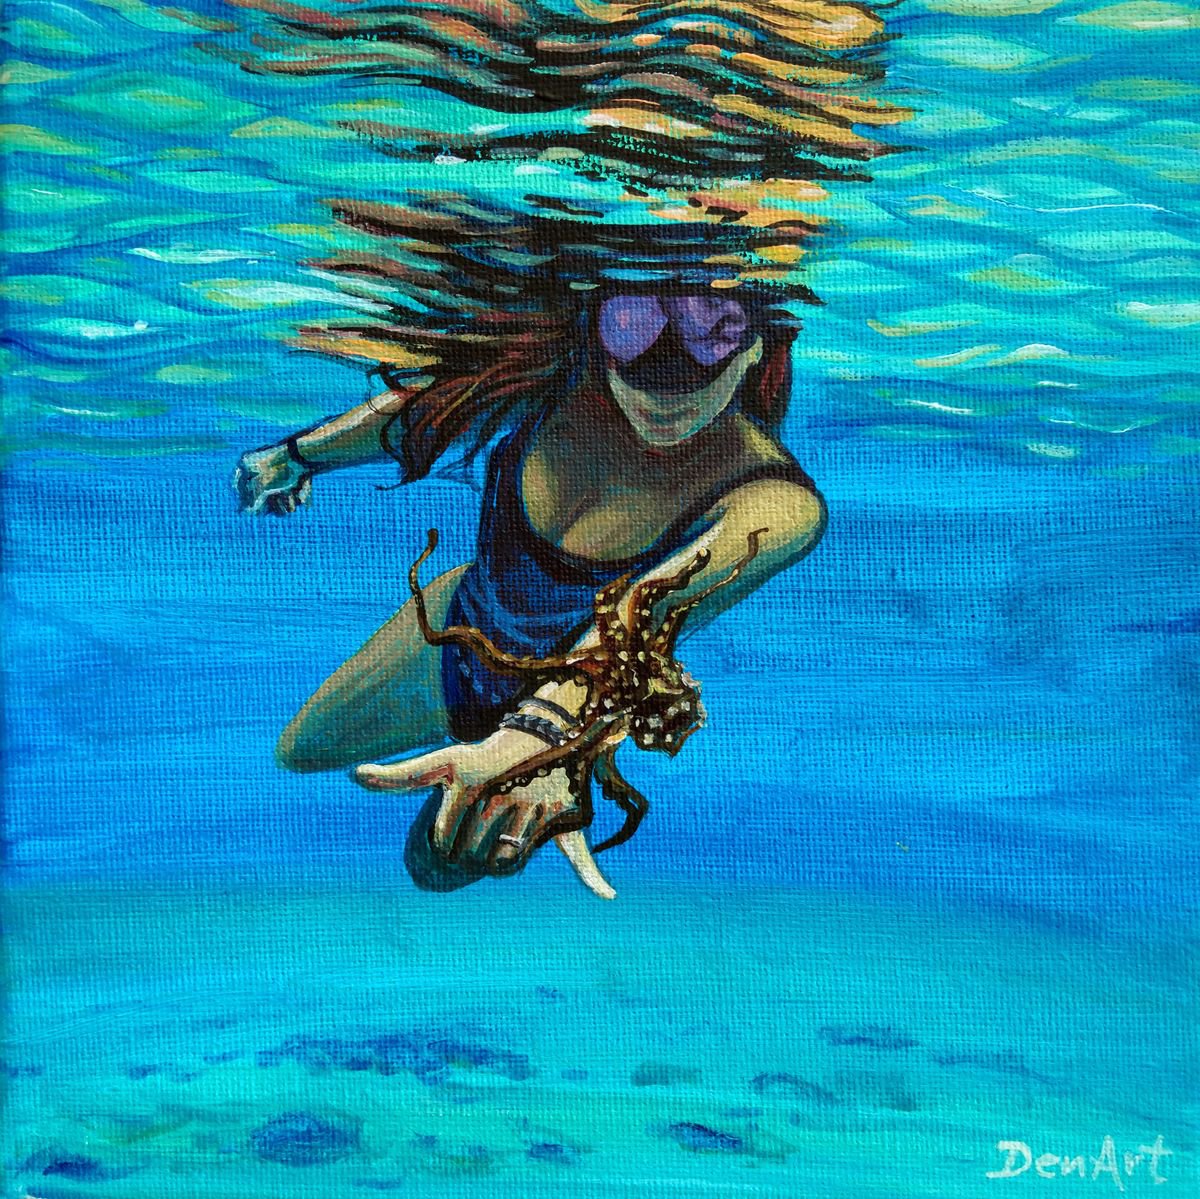 Underwater fun by ELENI DENART